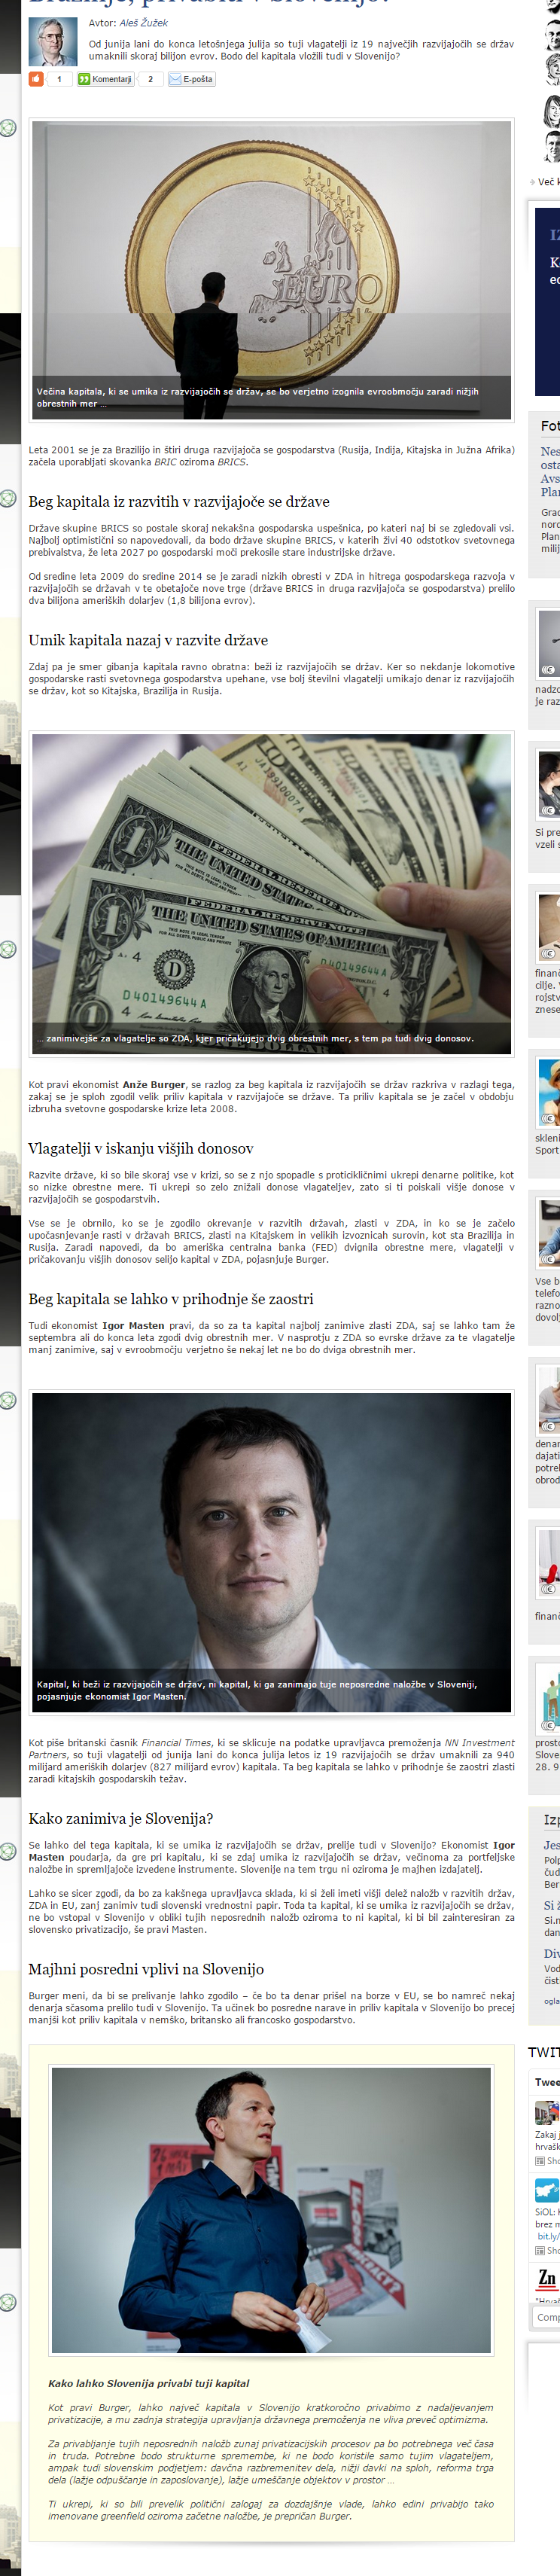 screencapture-www-siol-net-novice-svet-2015-08-beg_kapitala-aspx-1443090128189